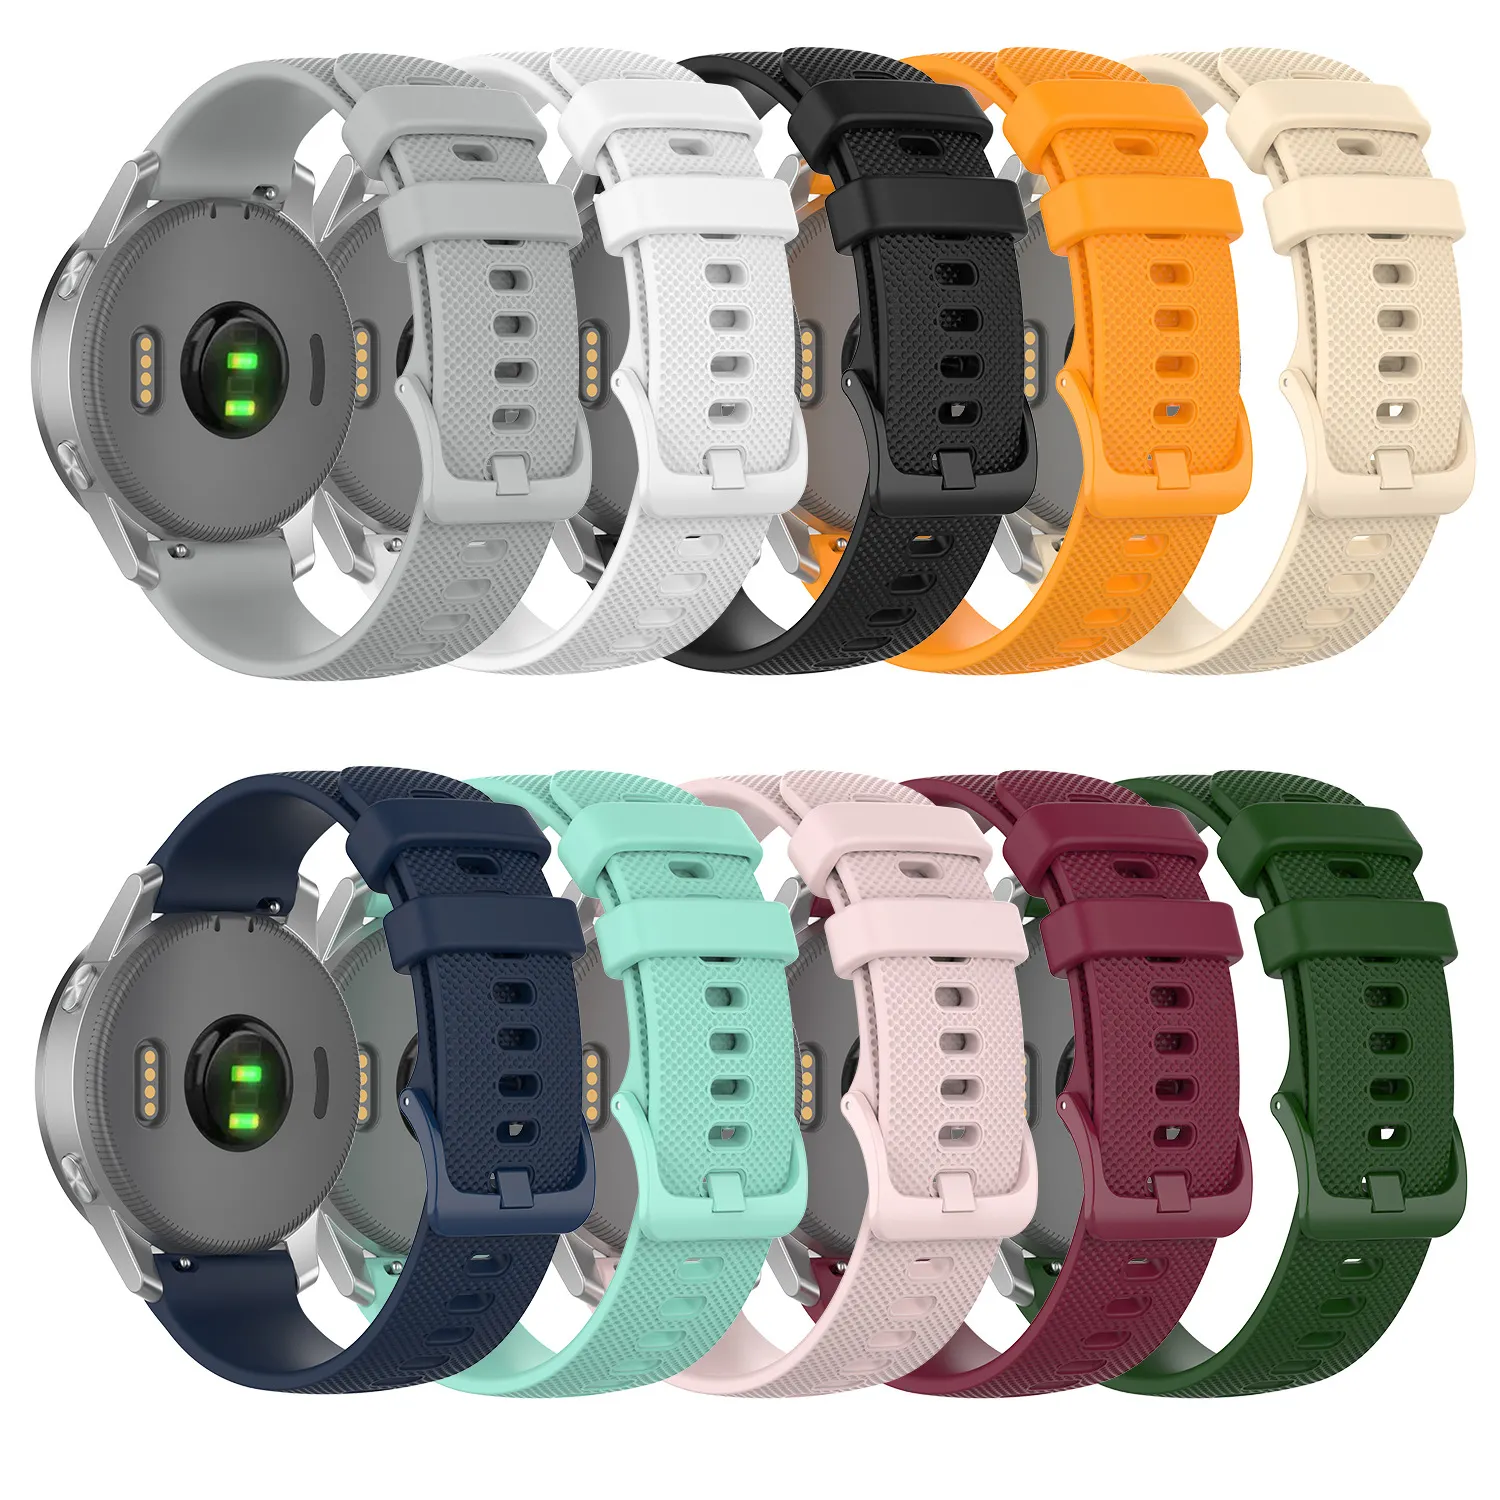 Tschick 18 20 22mm Sport Silicone Wrist Strap For Garmin Vivoactive4S 4 3 Watch Band For Vivoactive 3 4 4S Wristband Accessories